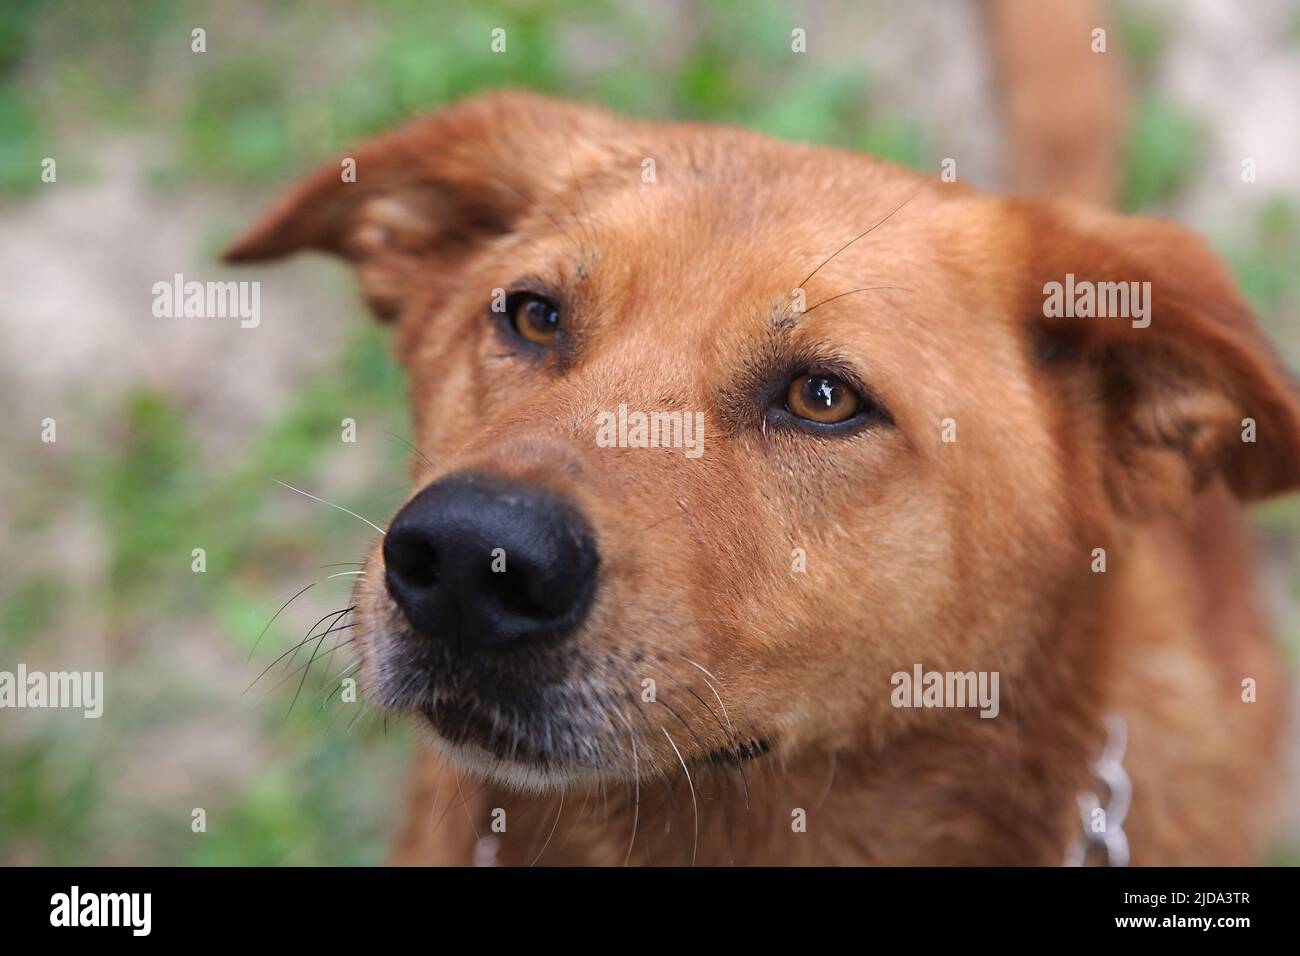 Cute dog portrait Stock Photo